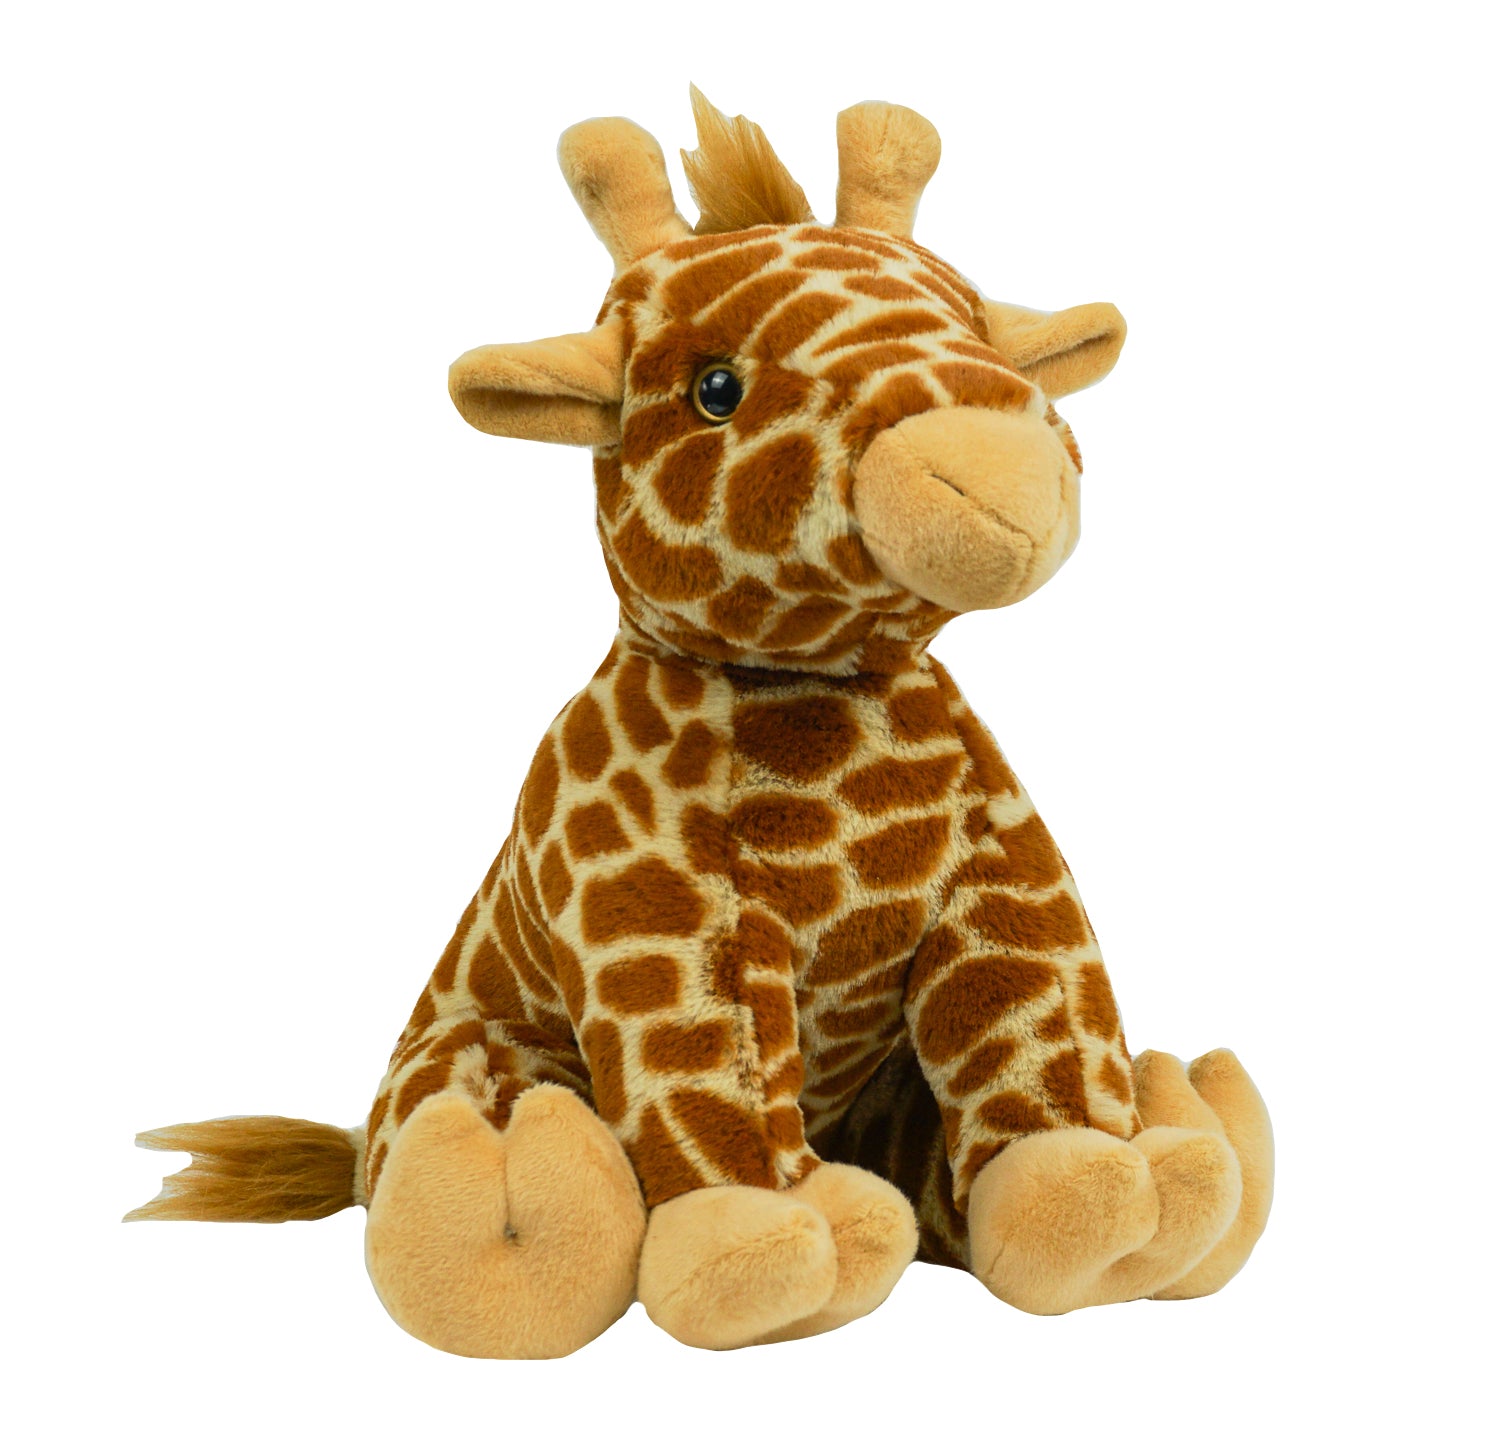 Giraffe 16 inch stuffed plush safari animal for pretend play